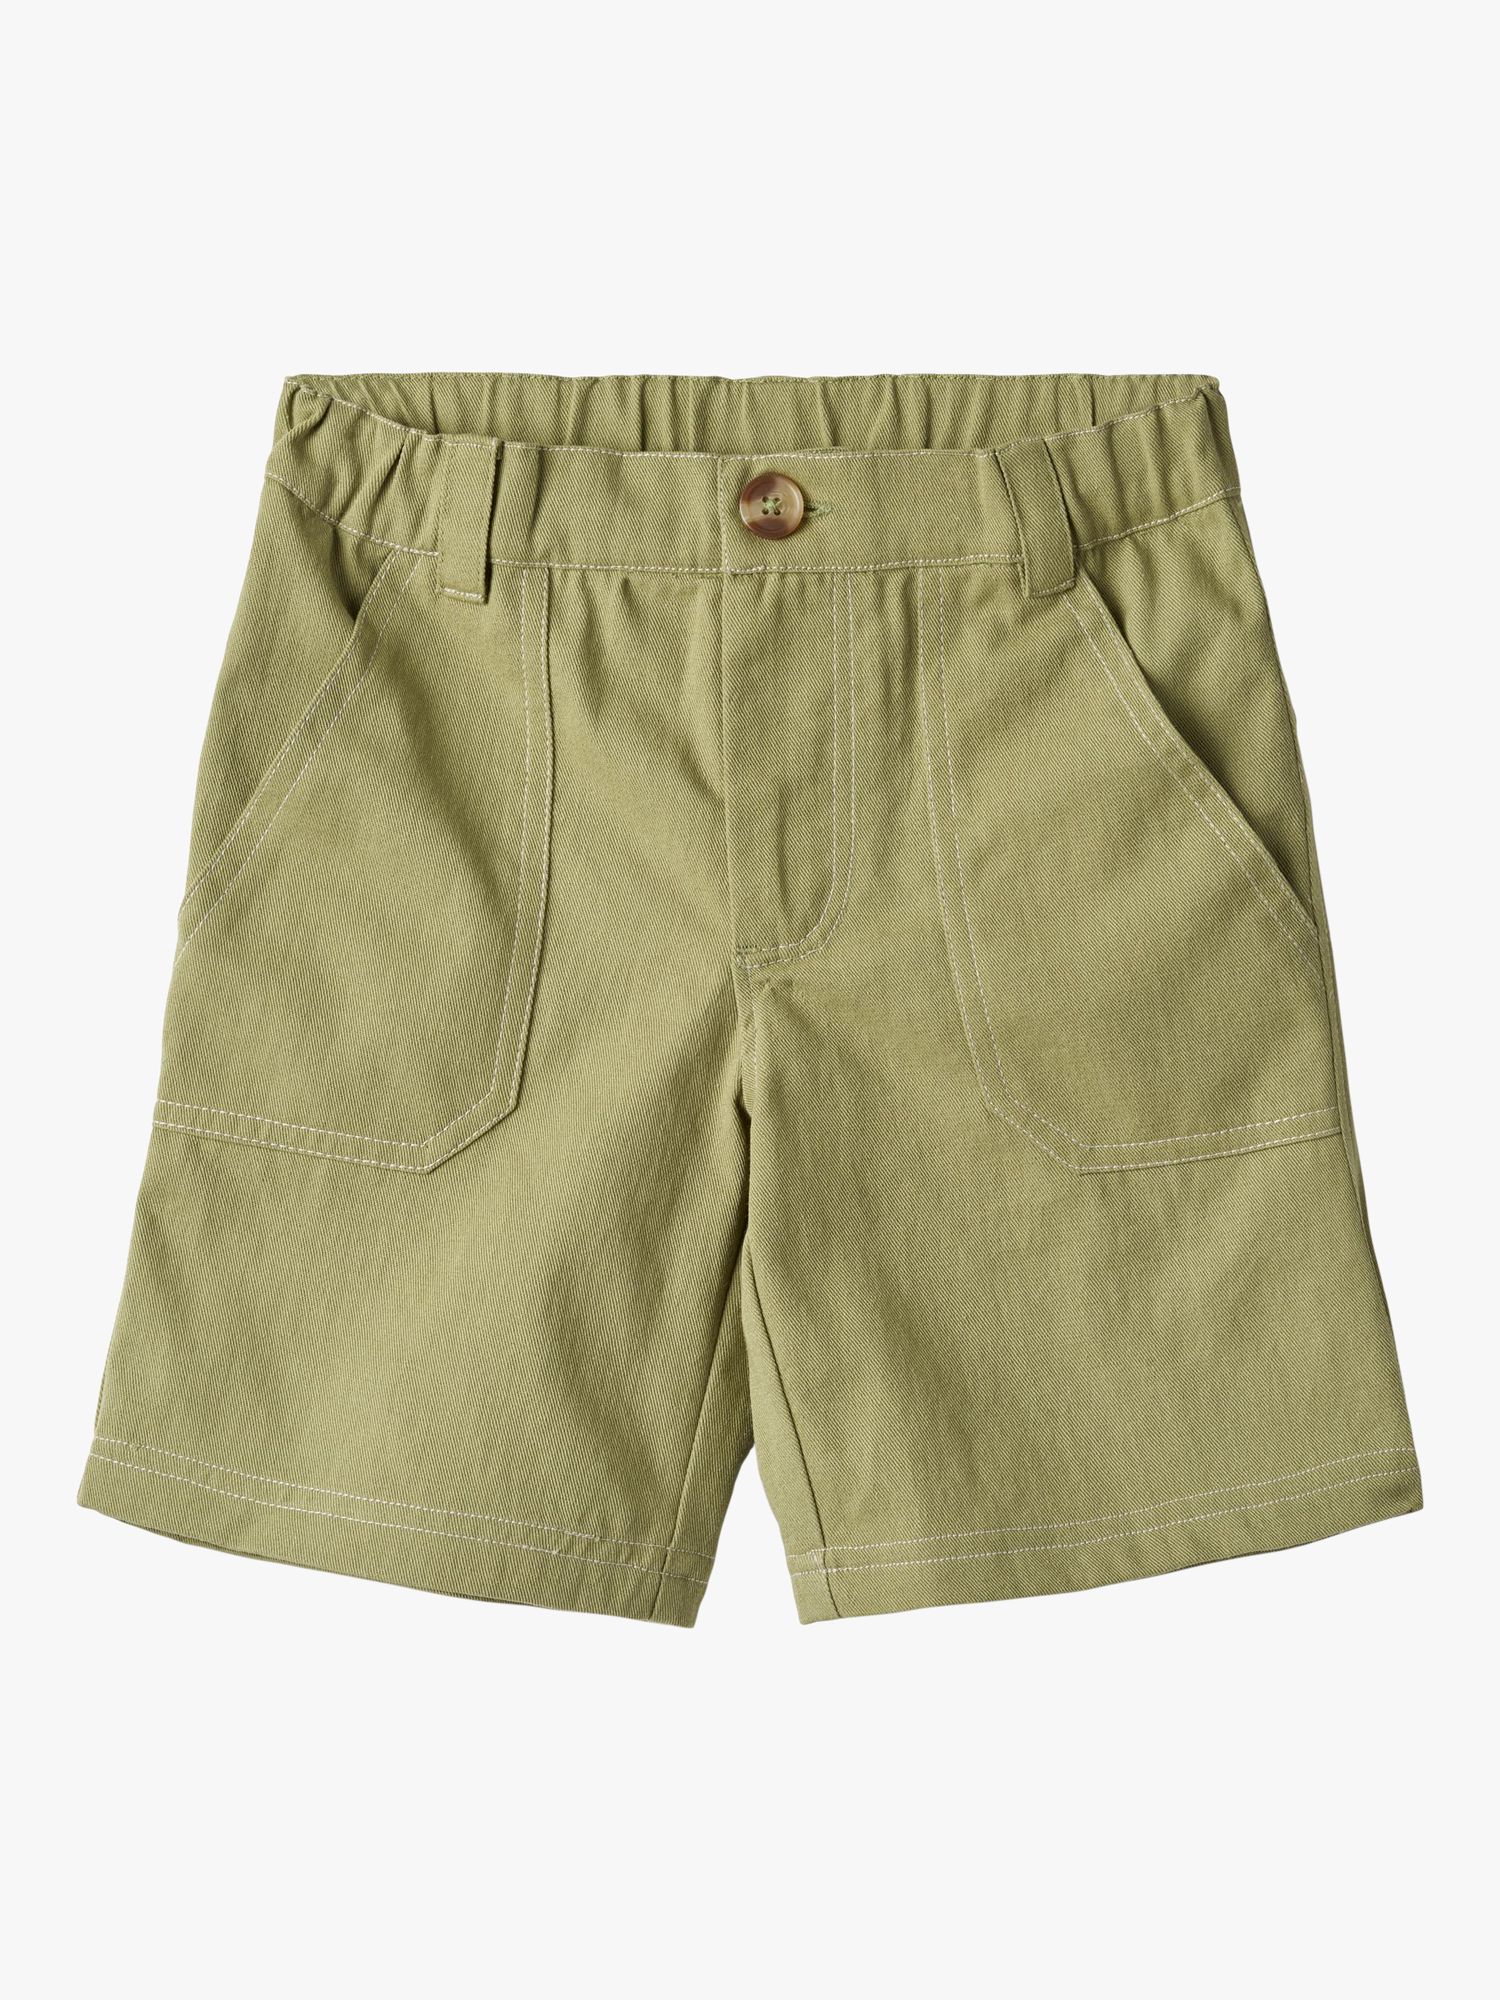 WHEAT Kids' Pelle Shorts, Sage, 3 years